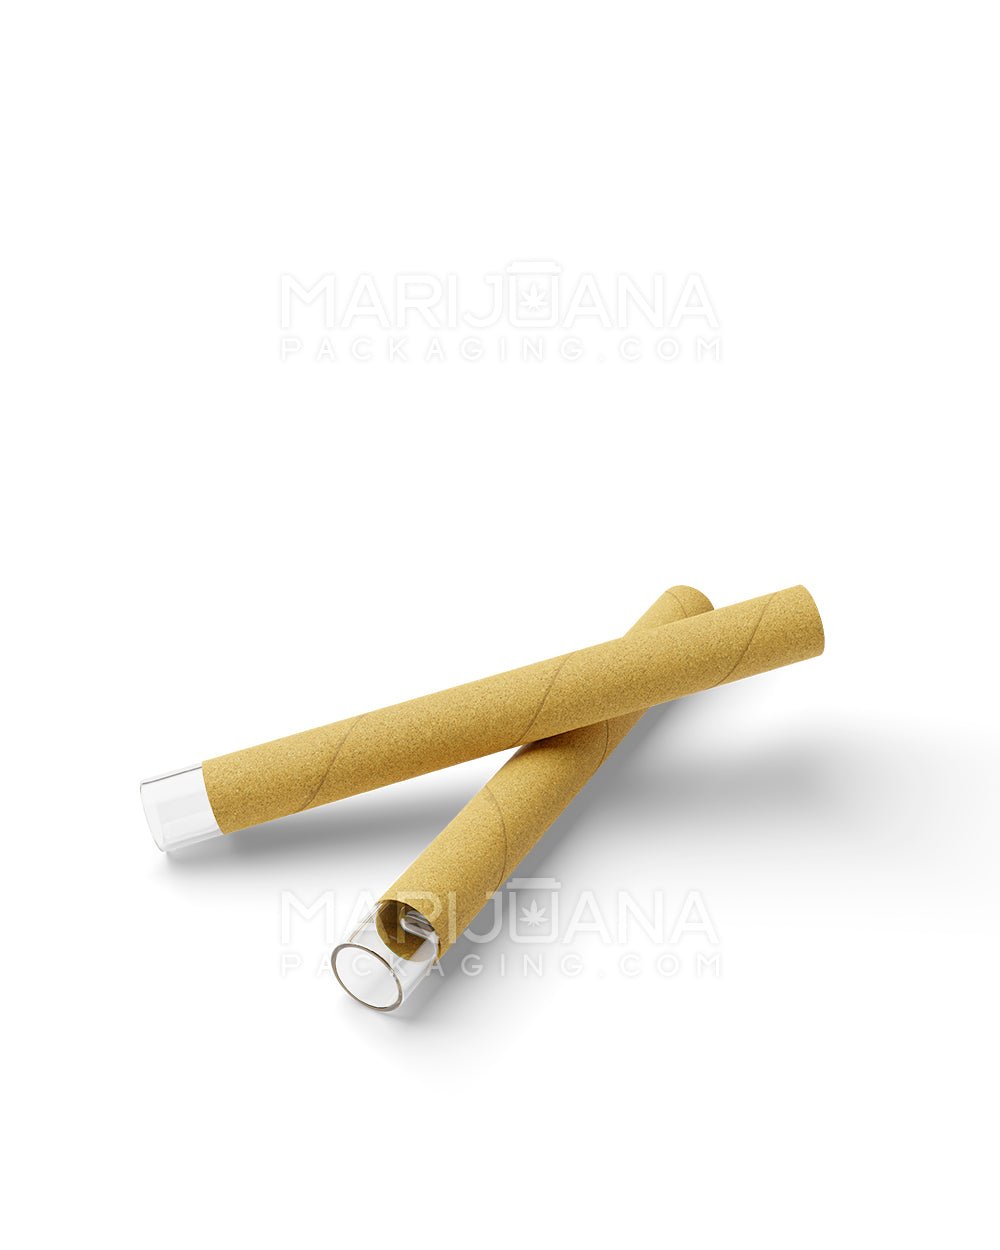 XXXL Big Blunt Cone - 10g Capacity Natural Smoking Wrap